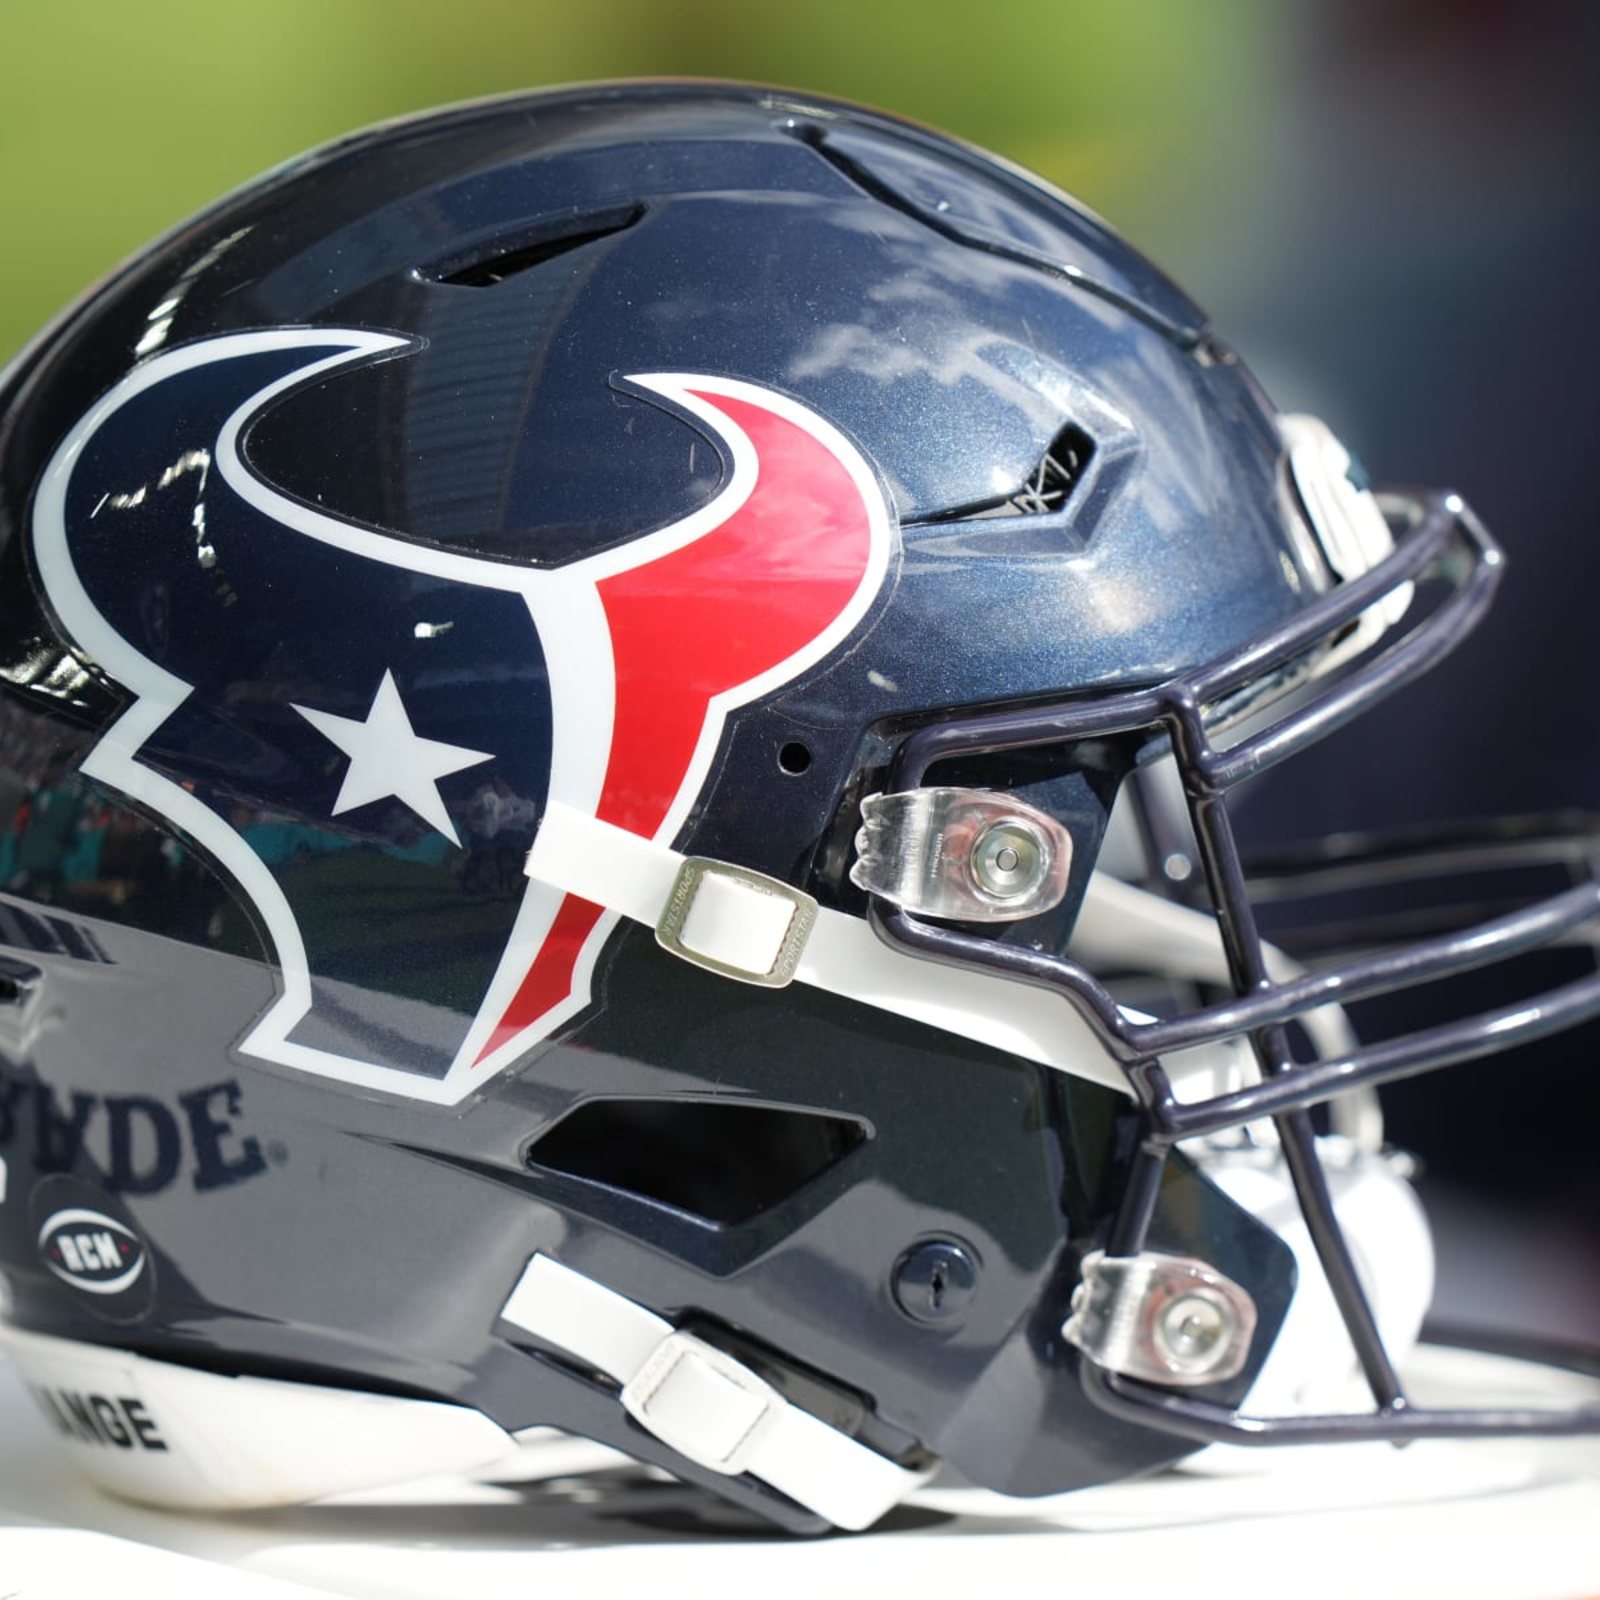 Houston Texans create Fan Council to help shape team's future